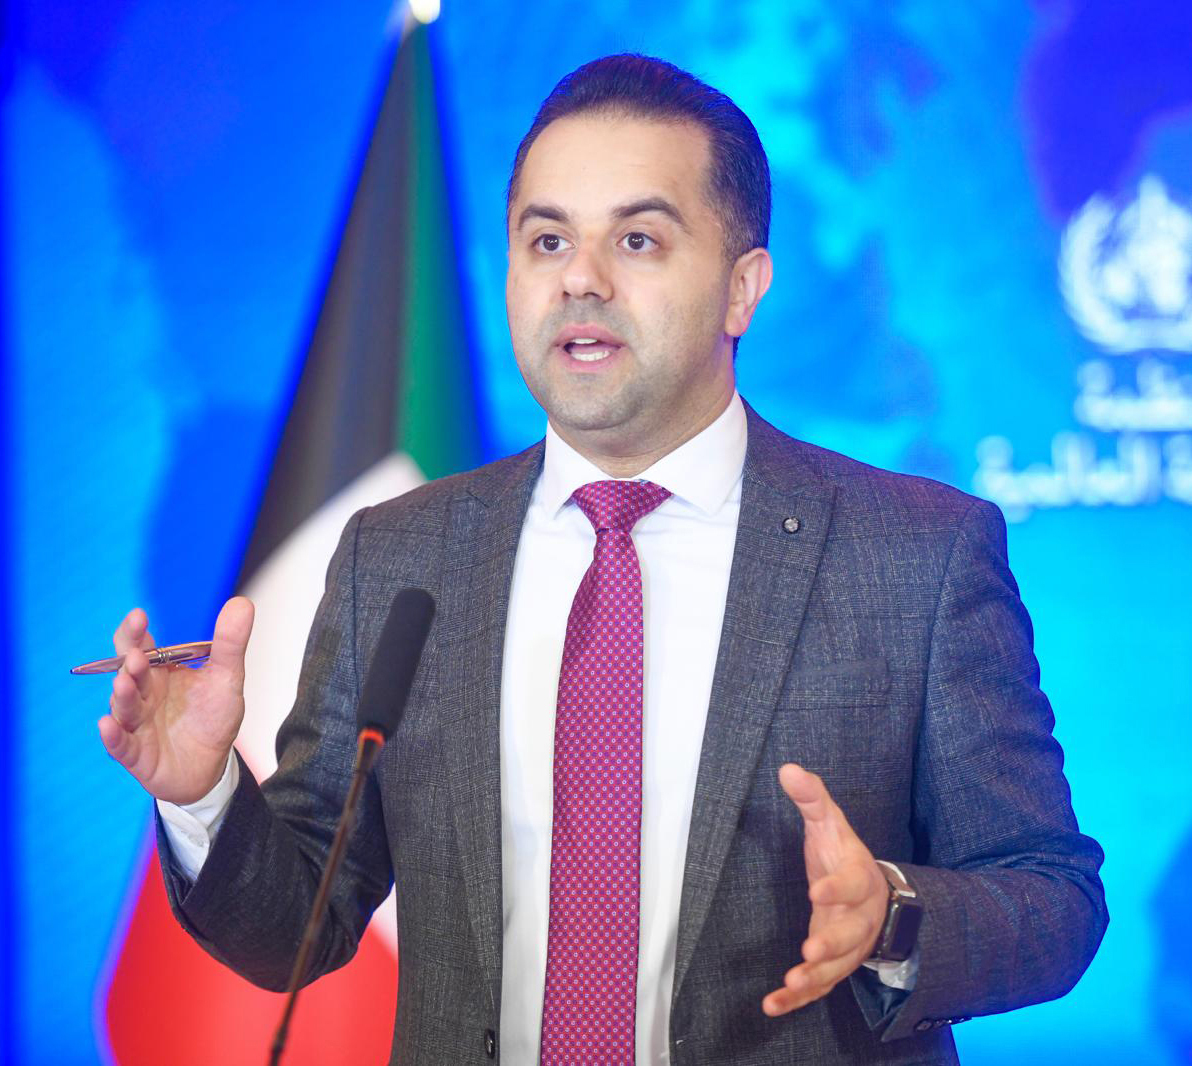 Dr. Abdullah Al-Sanad